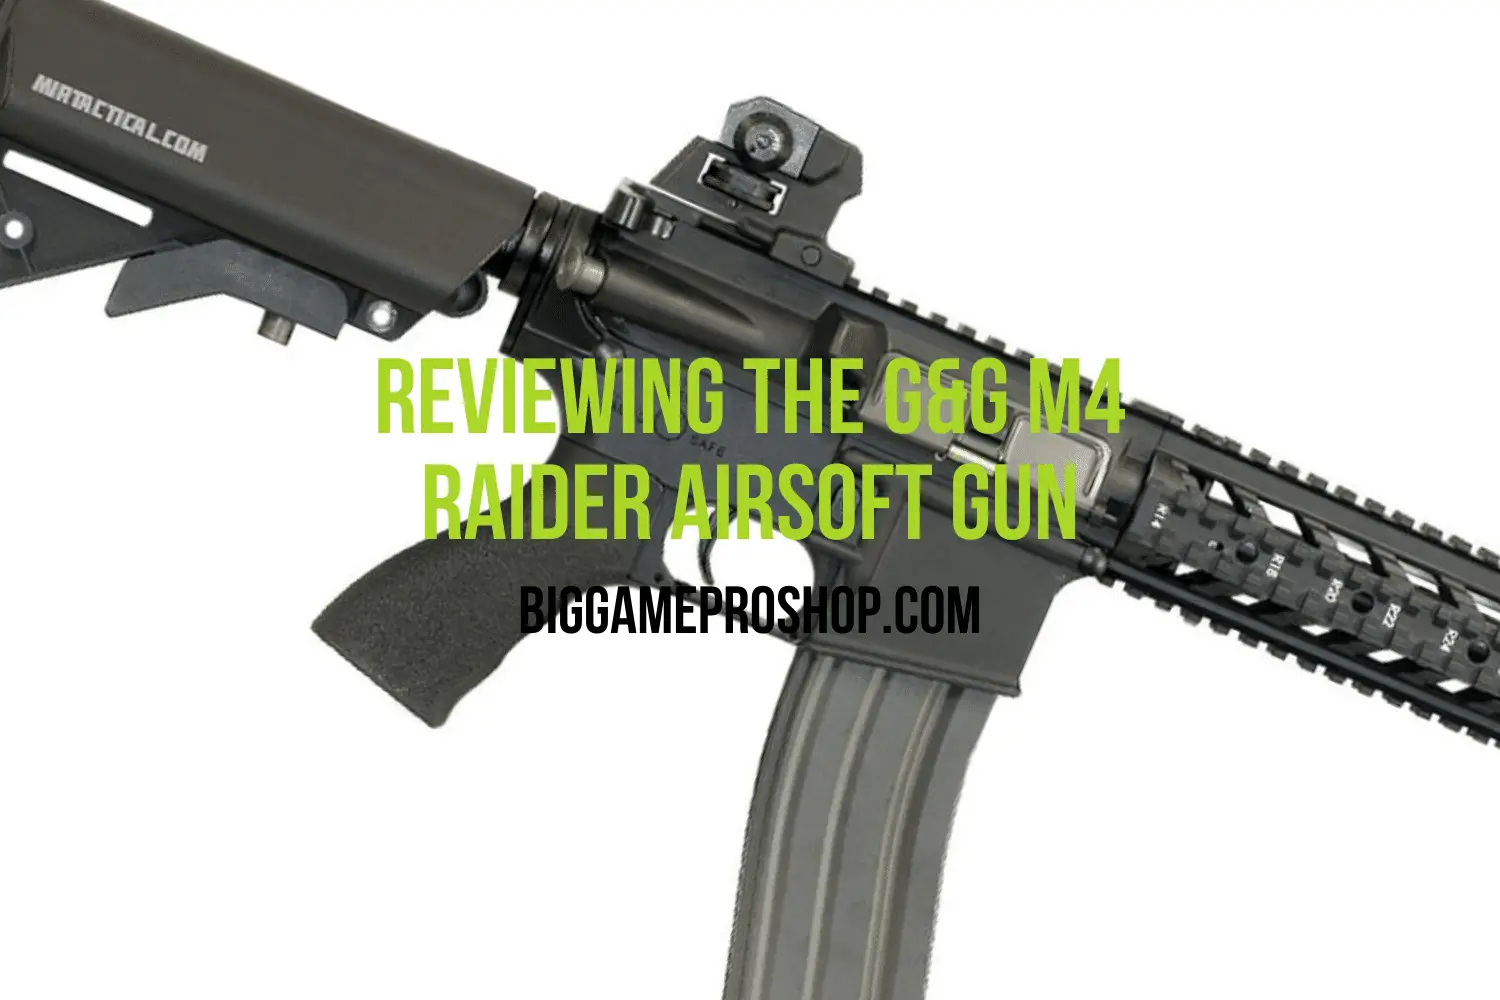 G G M4 Raider Airsoft Gun Review Updated Big Game Pro Shop